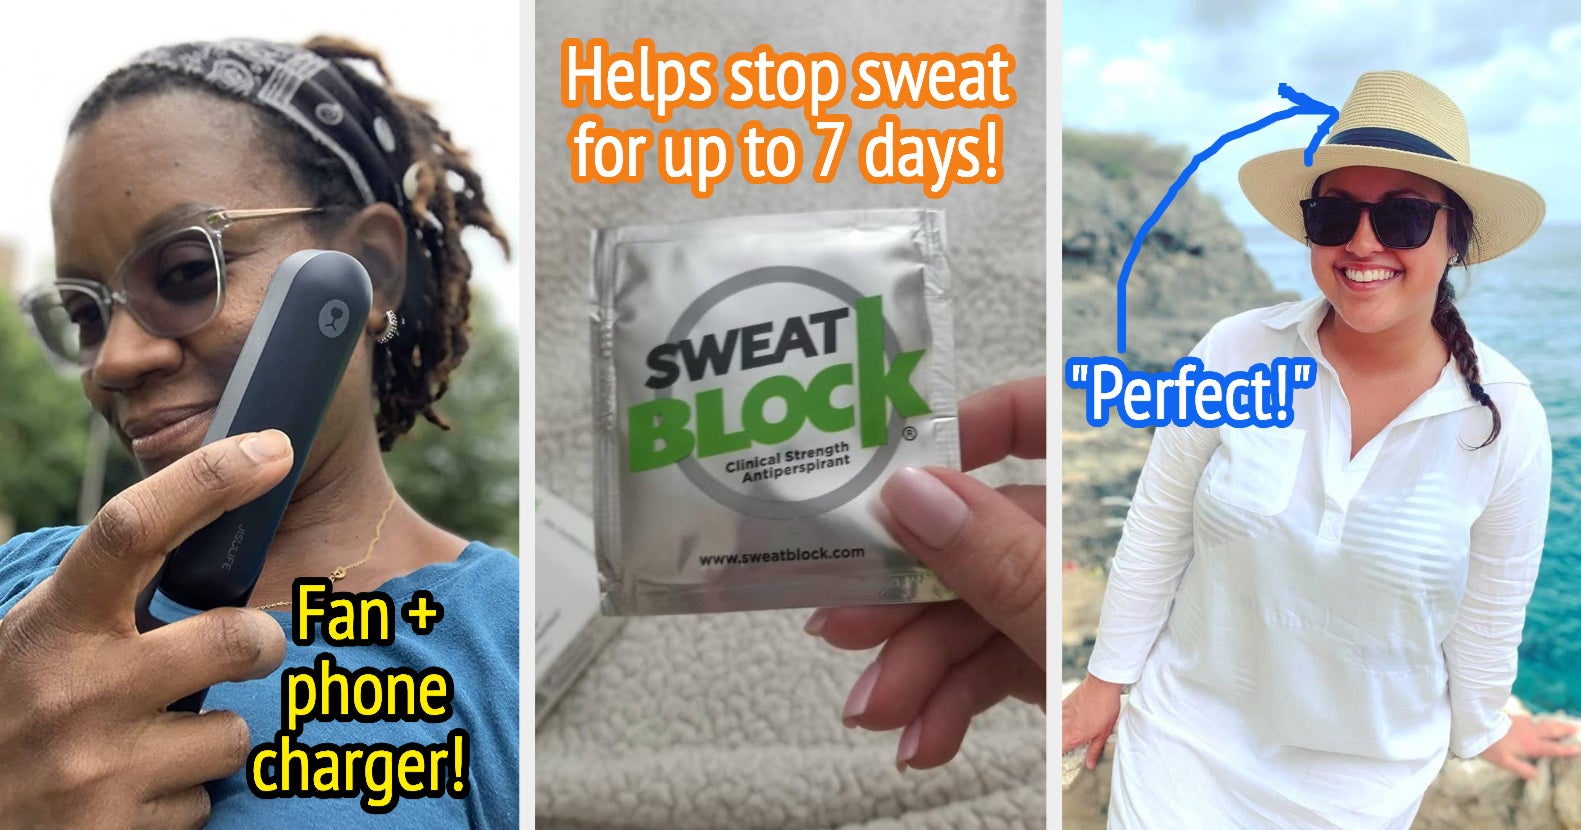 Sweat Block,Underarm Sweat Pads, Sweat Block Bra,Reusable Cotton